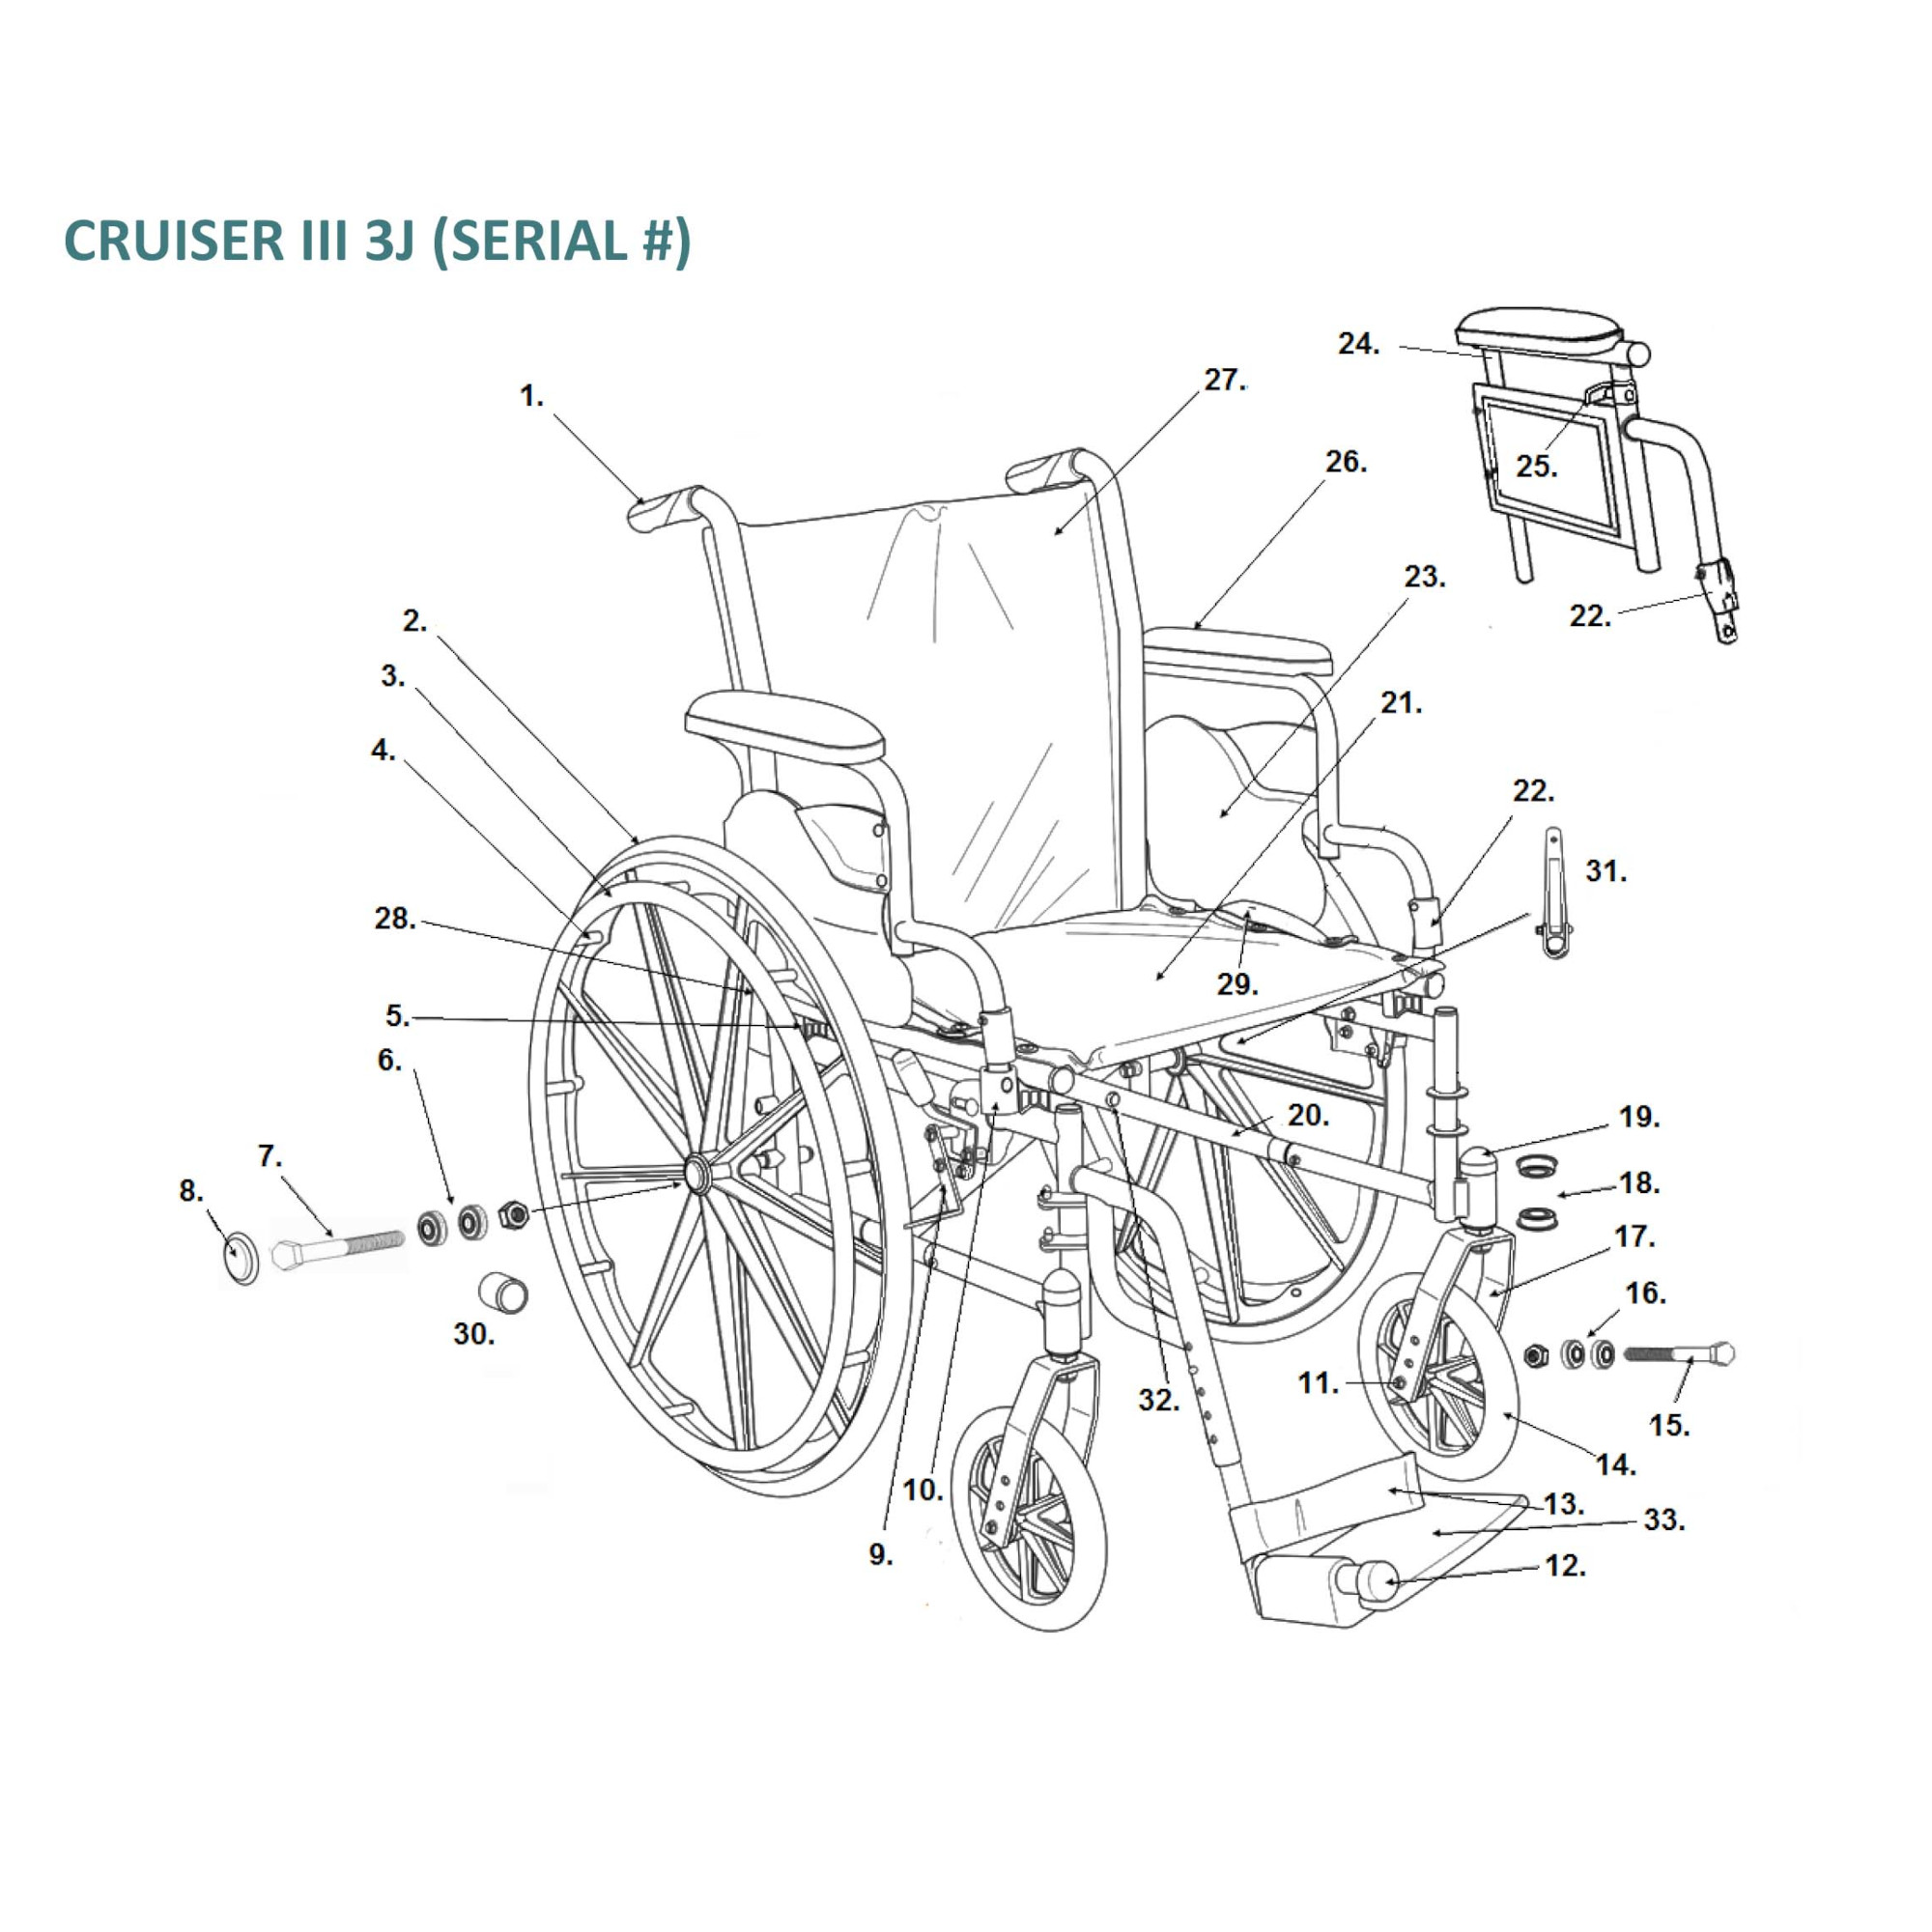 Cruiser III 3J (serial #) Parts